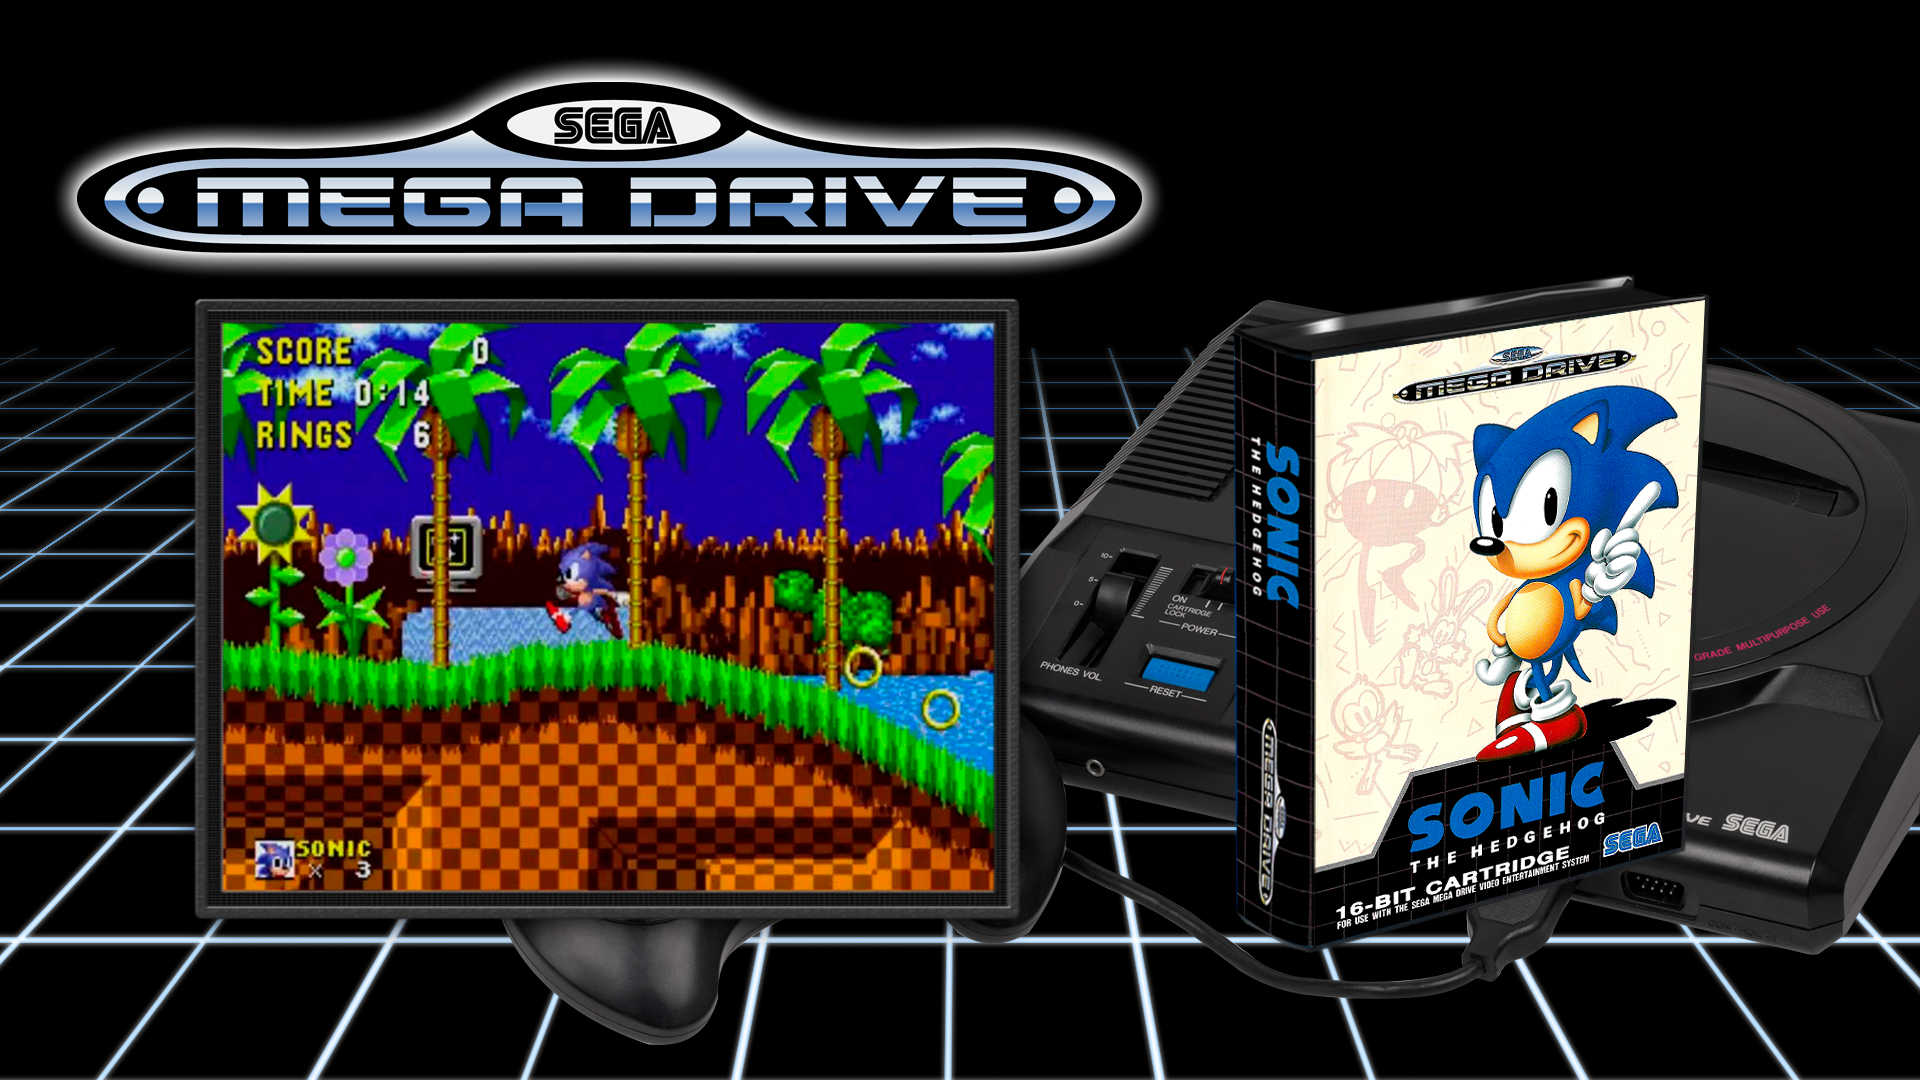 Sega mega drive games. Sega Mega Drive колокольчики. Sega Heroes Sega Mega Drive Sega Mini. Sega Mega Drive 16 бит. Sega Mega Drive 2 эмулятор ПСП.